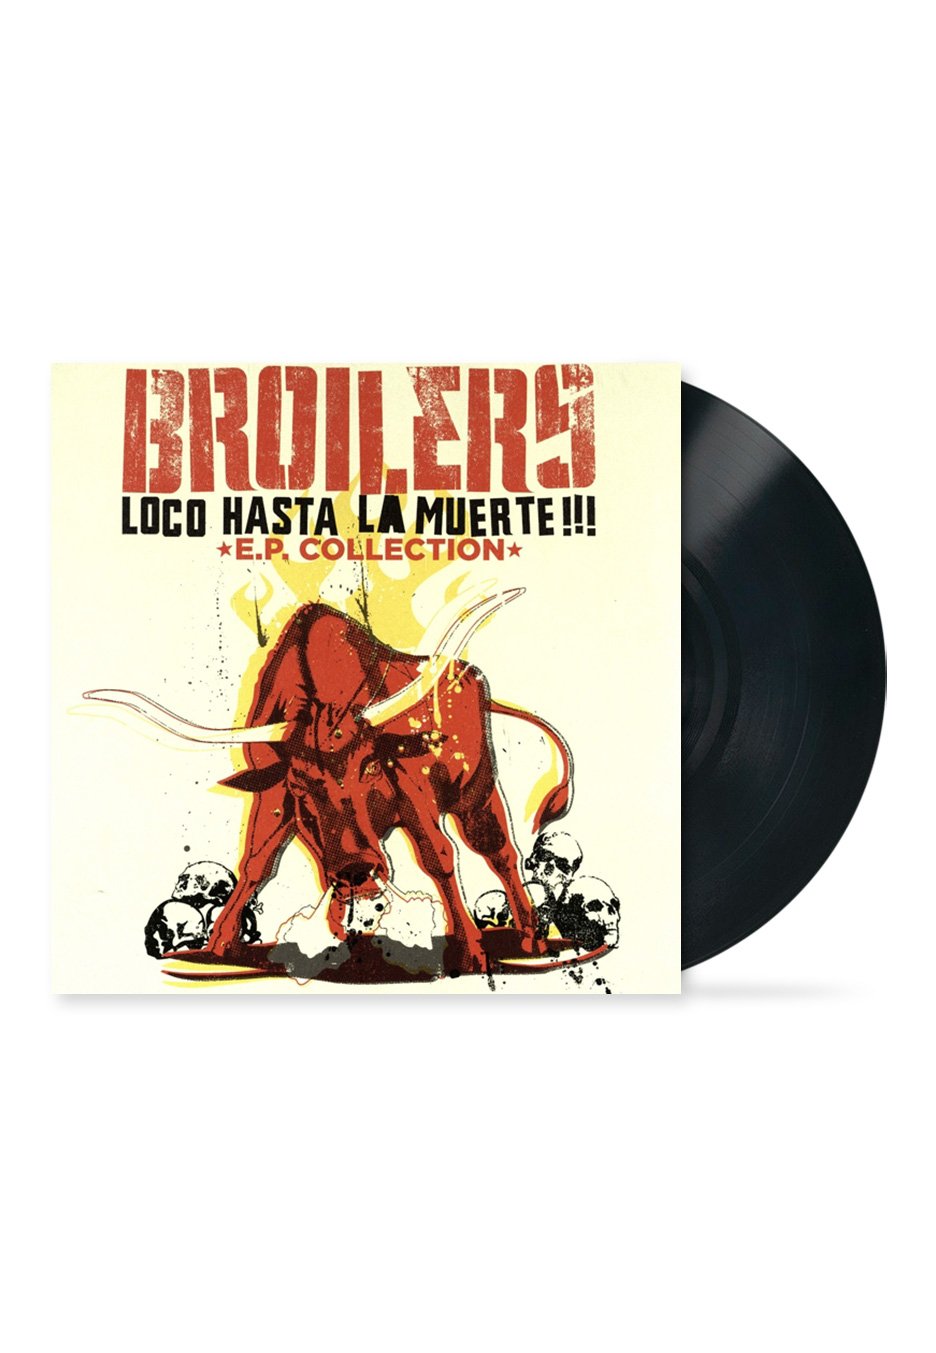 Broilers - Loco Hasta La Muerte!!! E.P. Collection - Vinyl